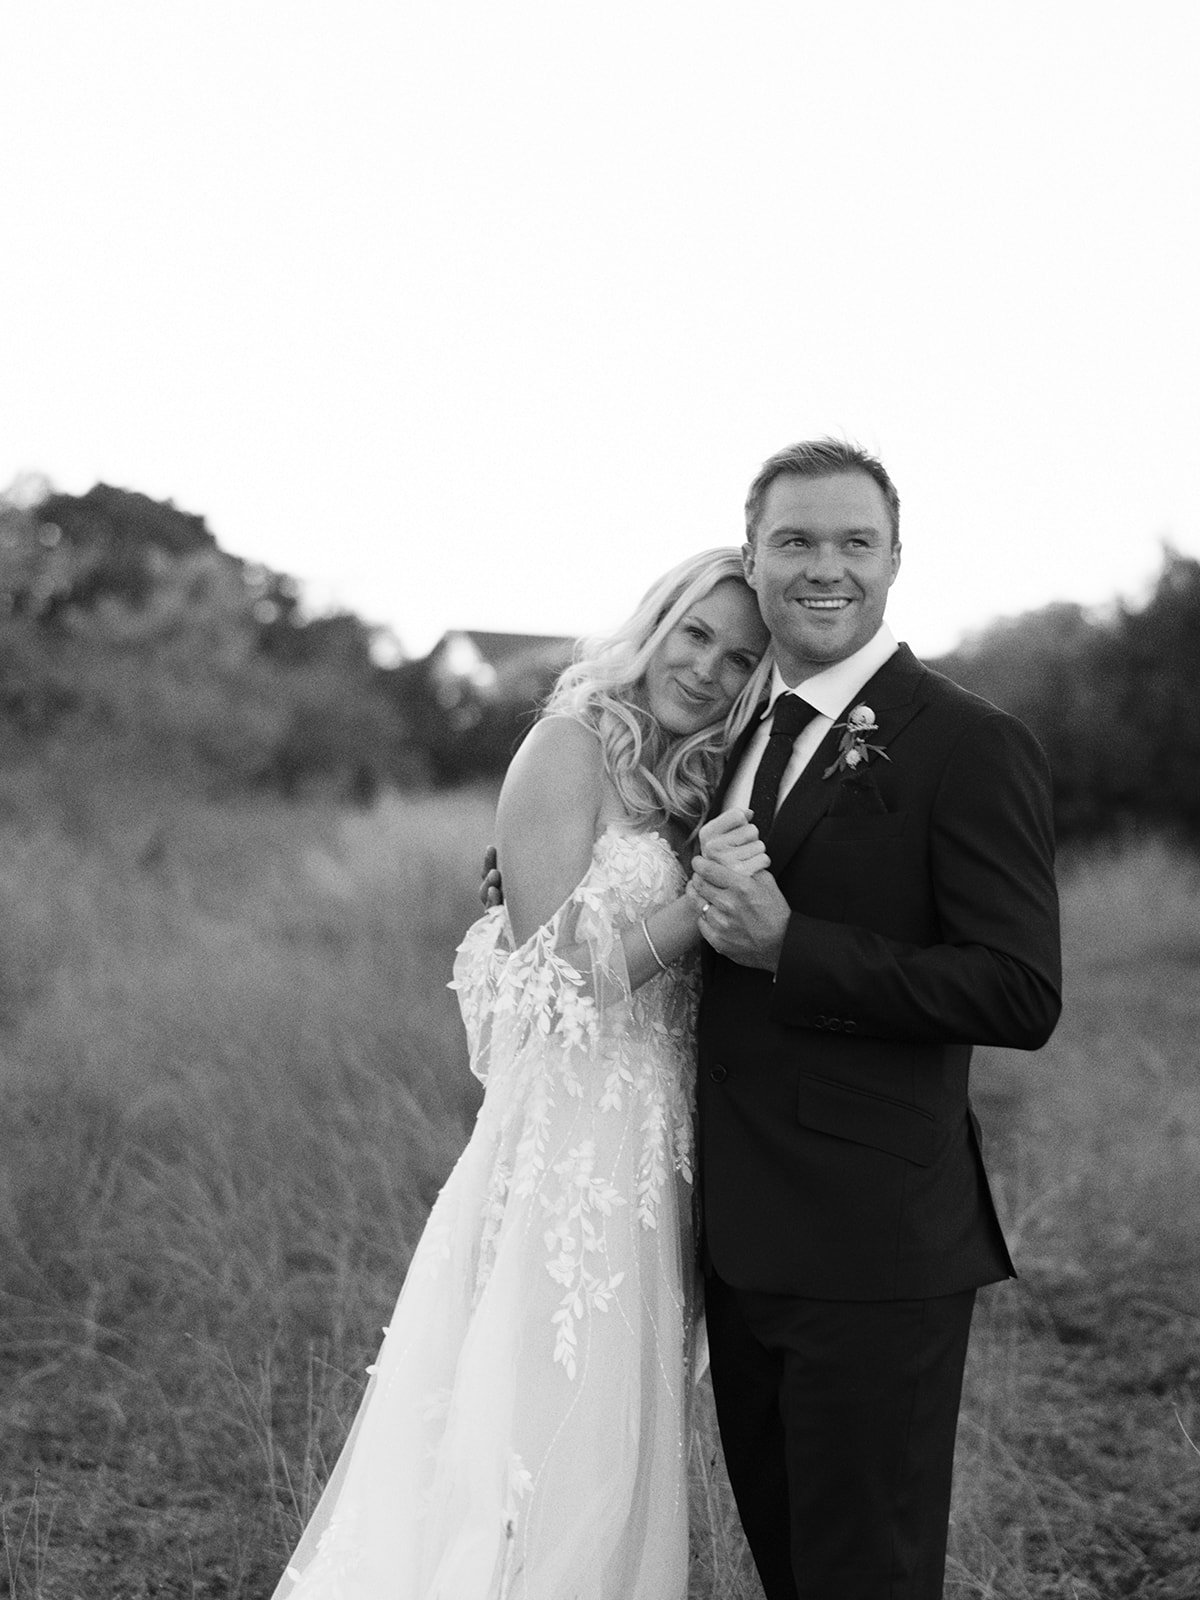 Best-Austin-Wedding-Photographers-Elopement-Film-35mm-Asheville-Santa-Barbara-Backyard-114.jpg